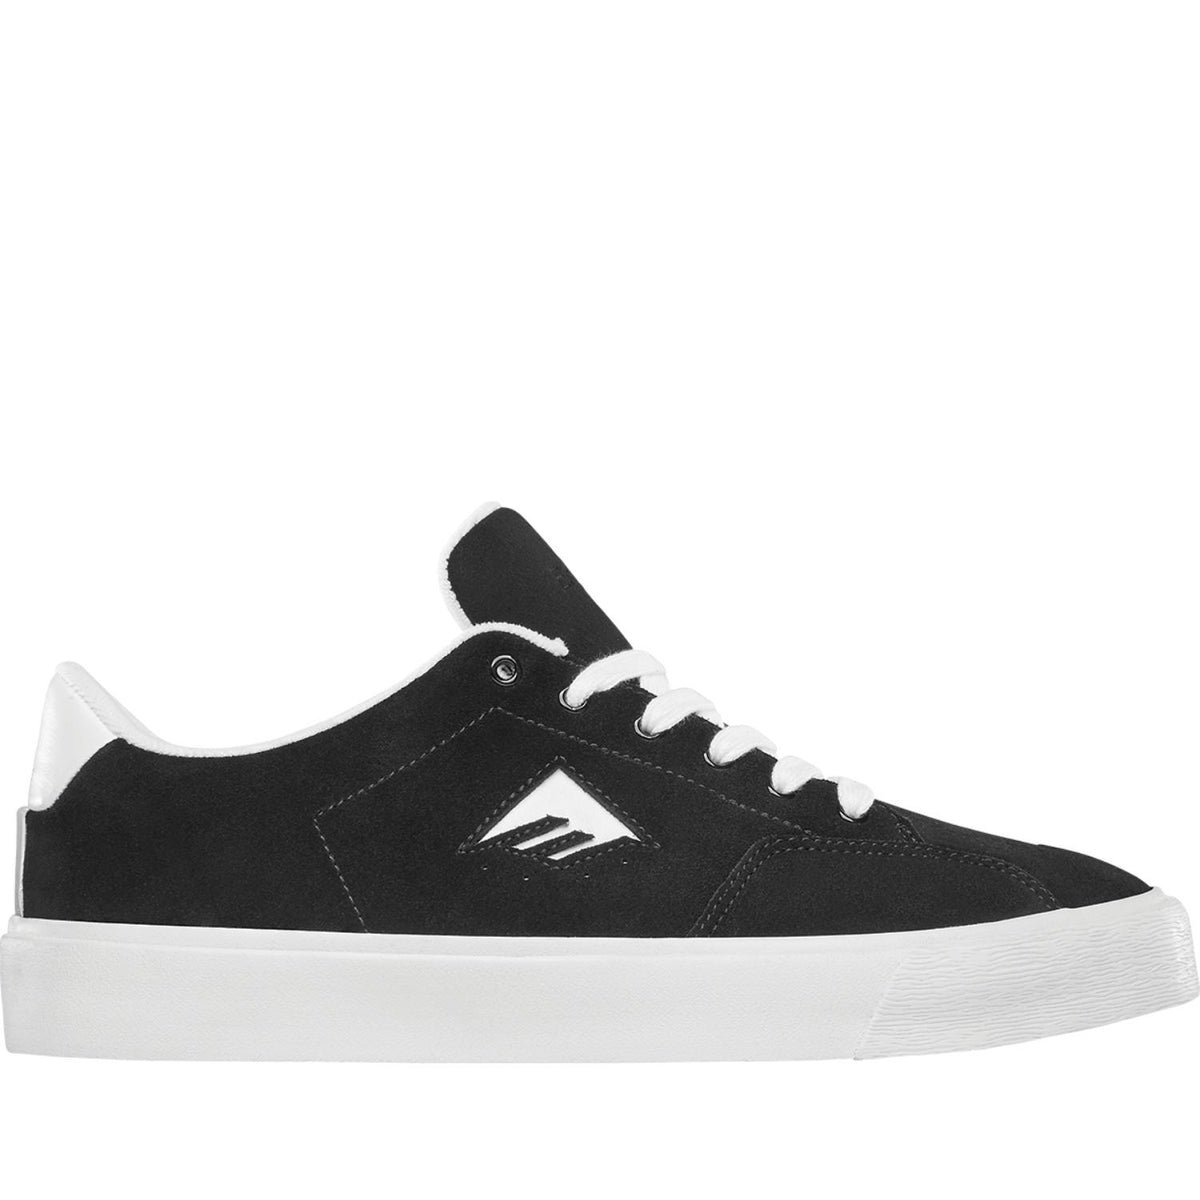 Emerica Temple Skate Shoes - Black - Mens Skate Shoes by Emerica